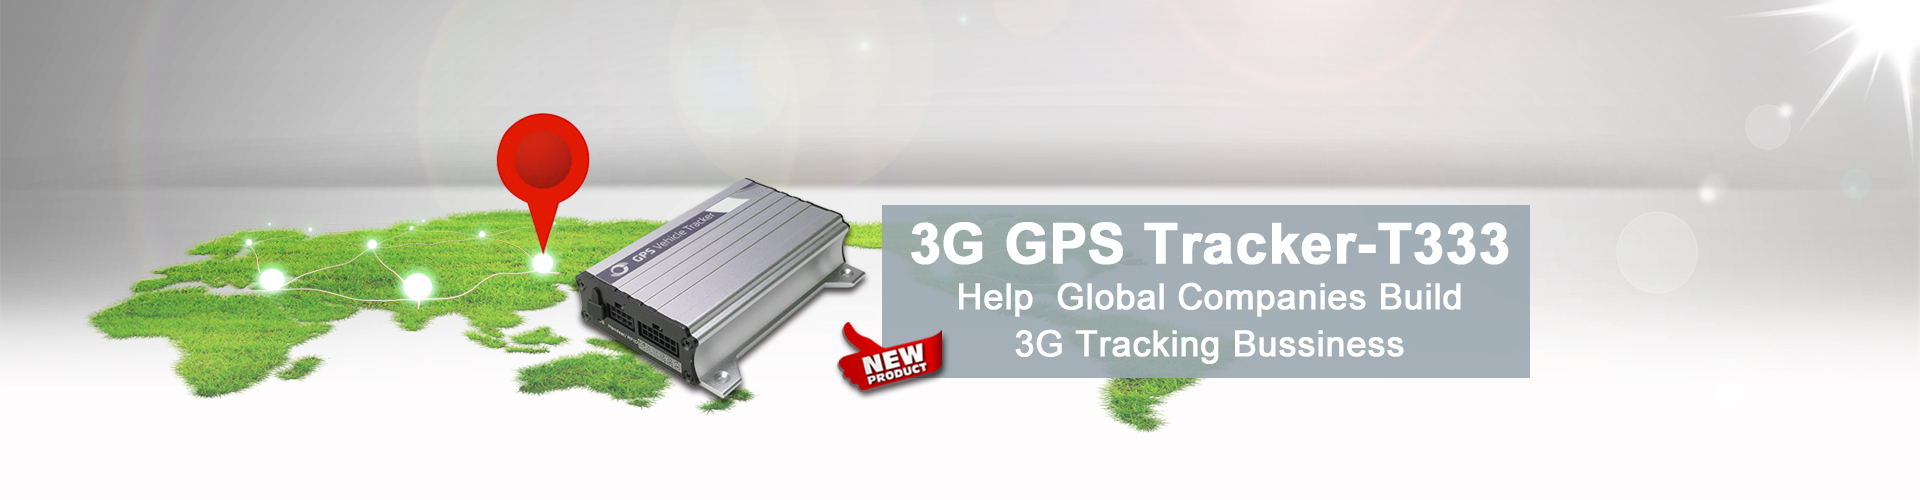 T333 3G GPS Tracker